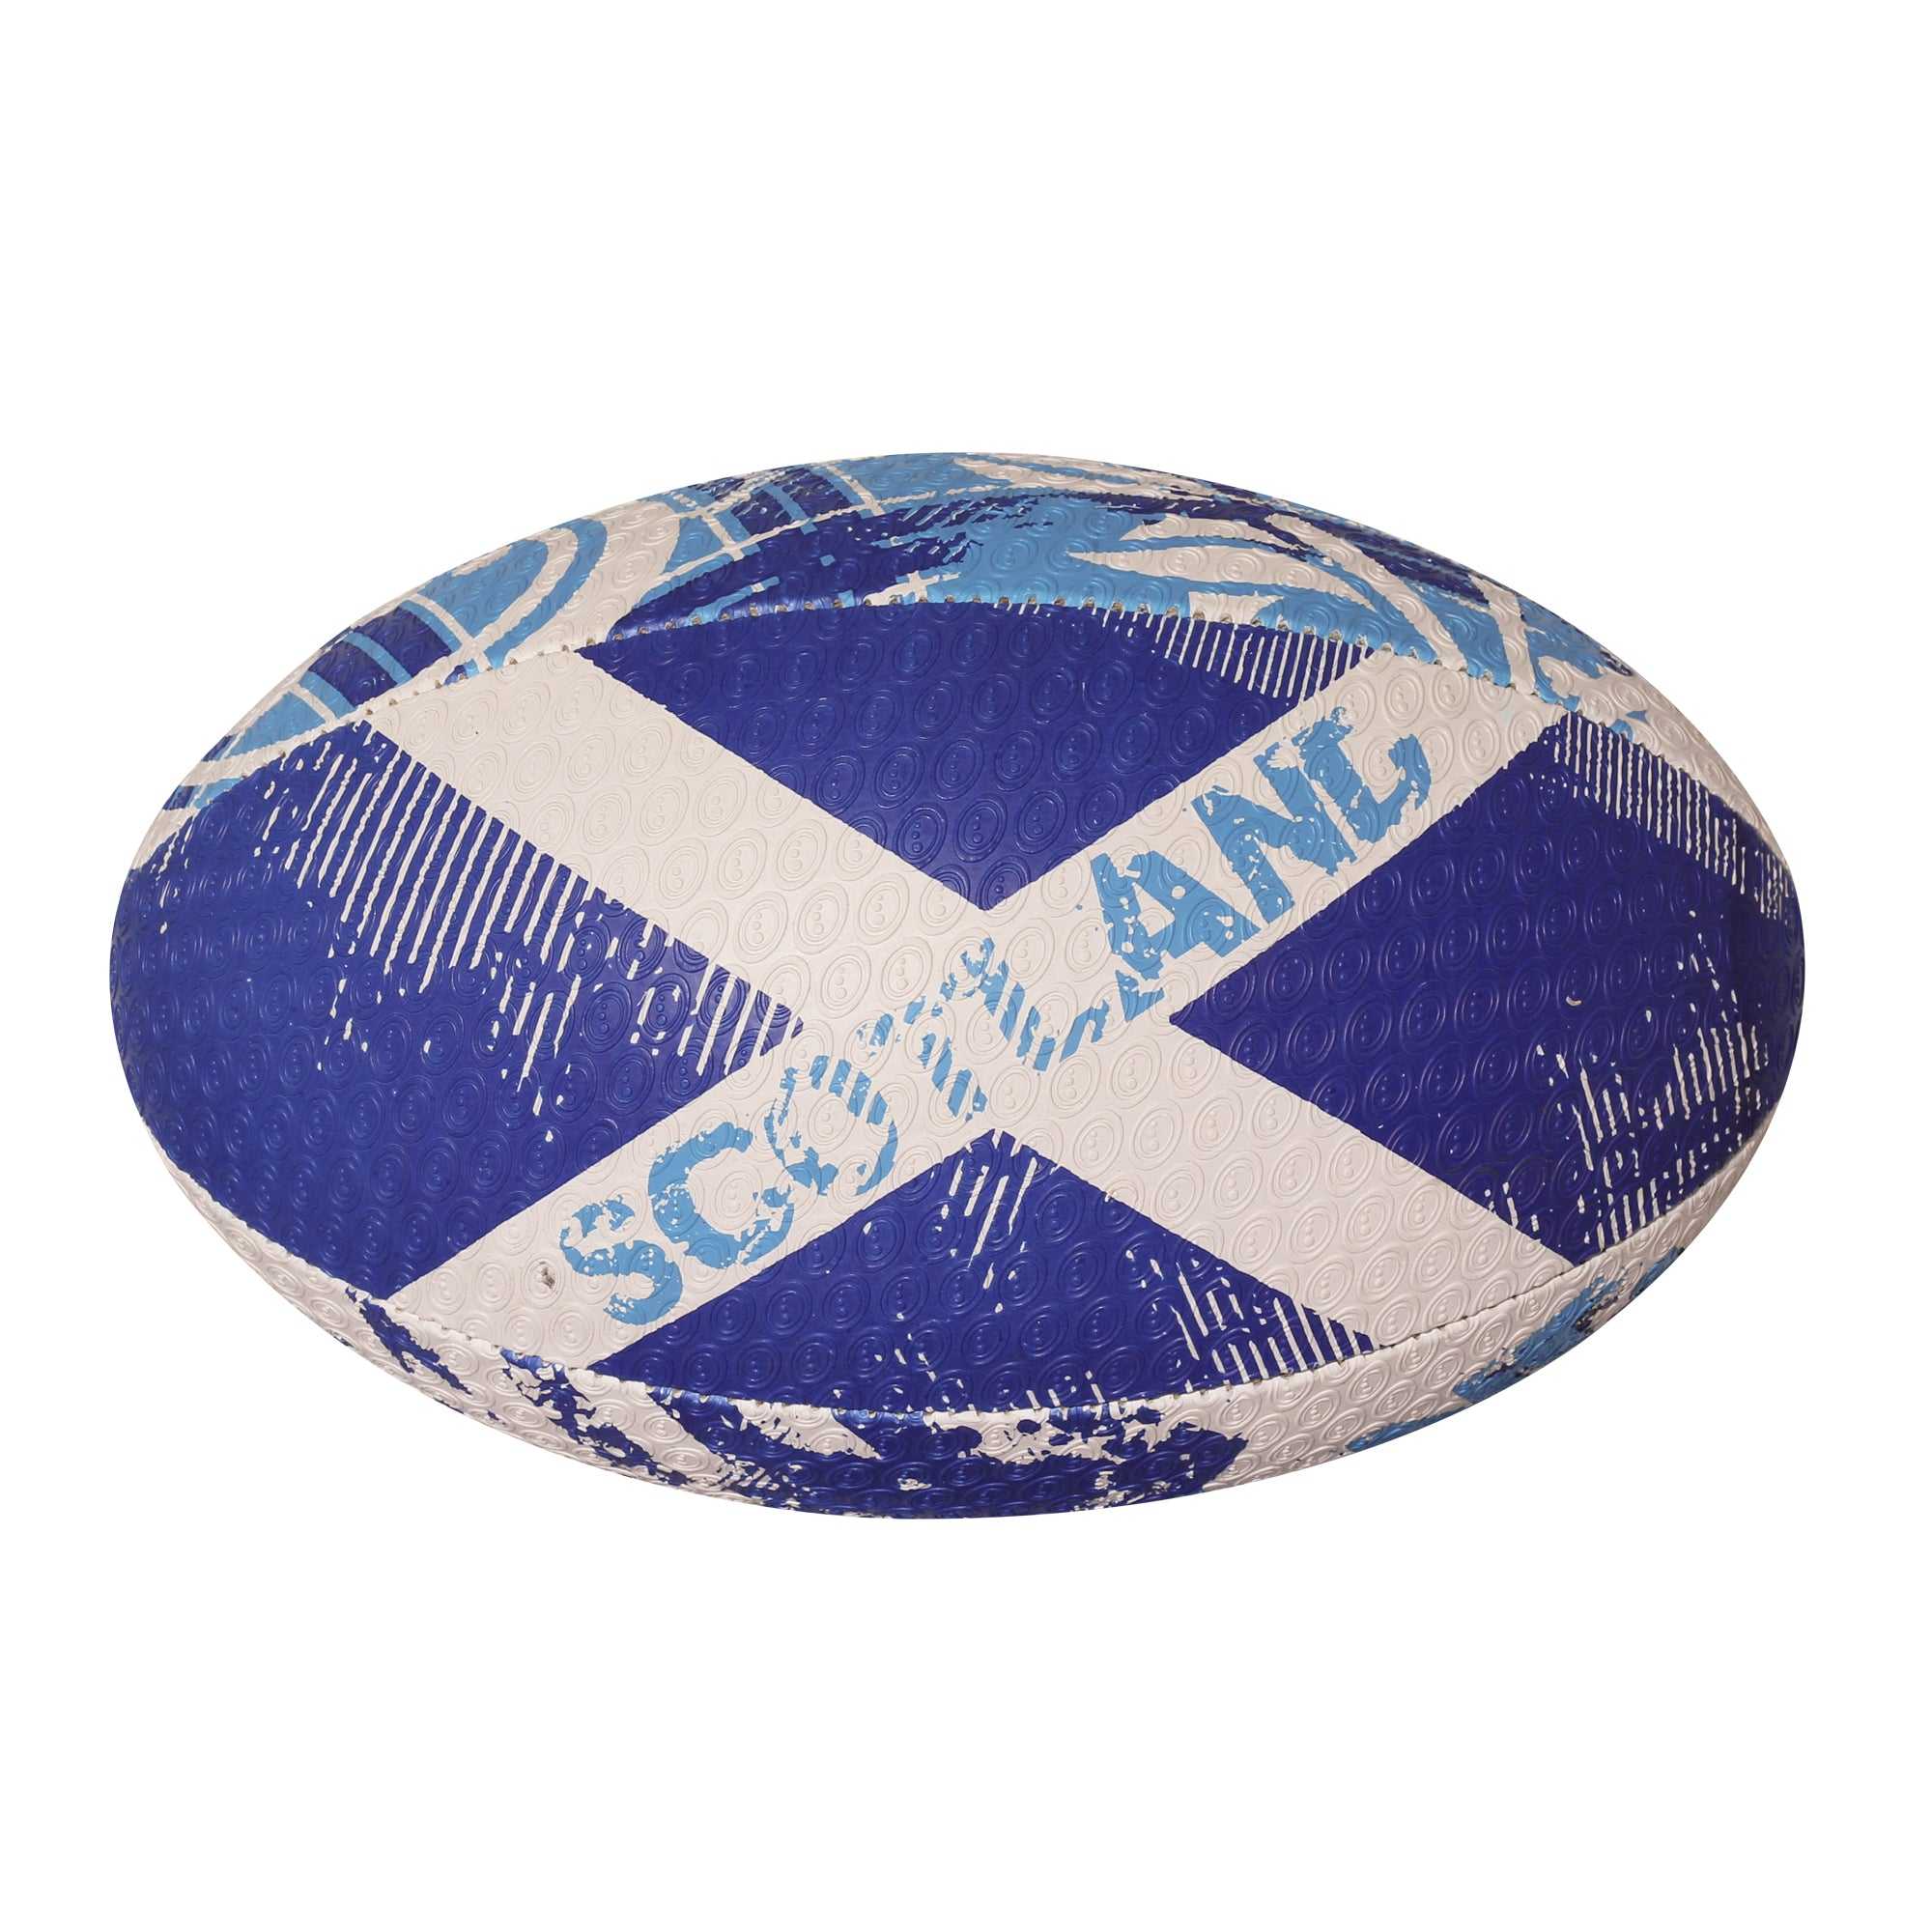 Scotland Rugby Ball - Optimum